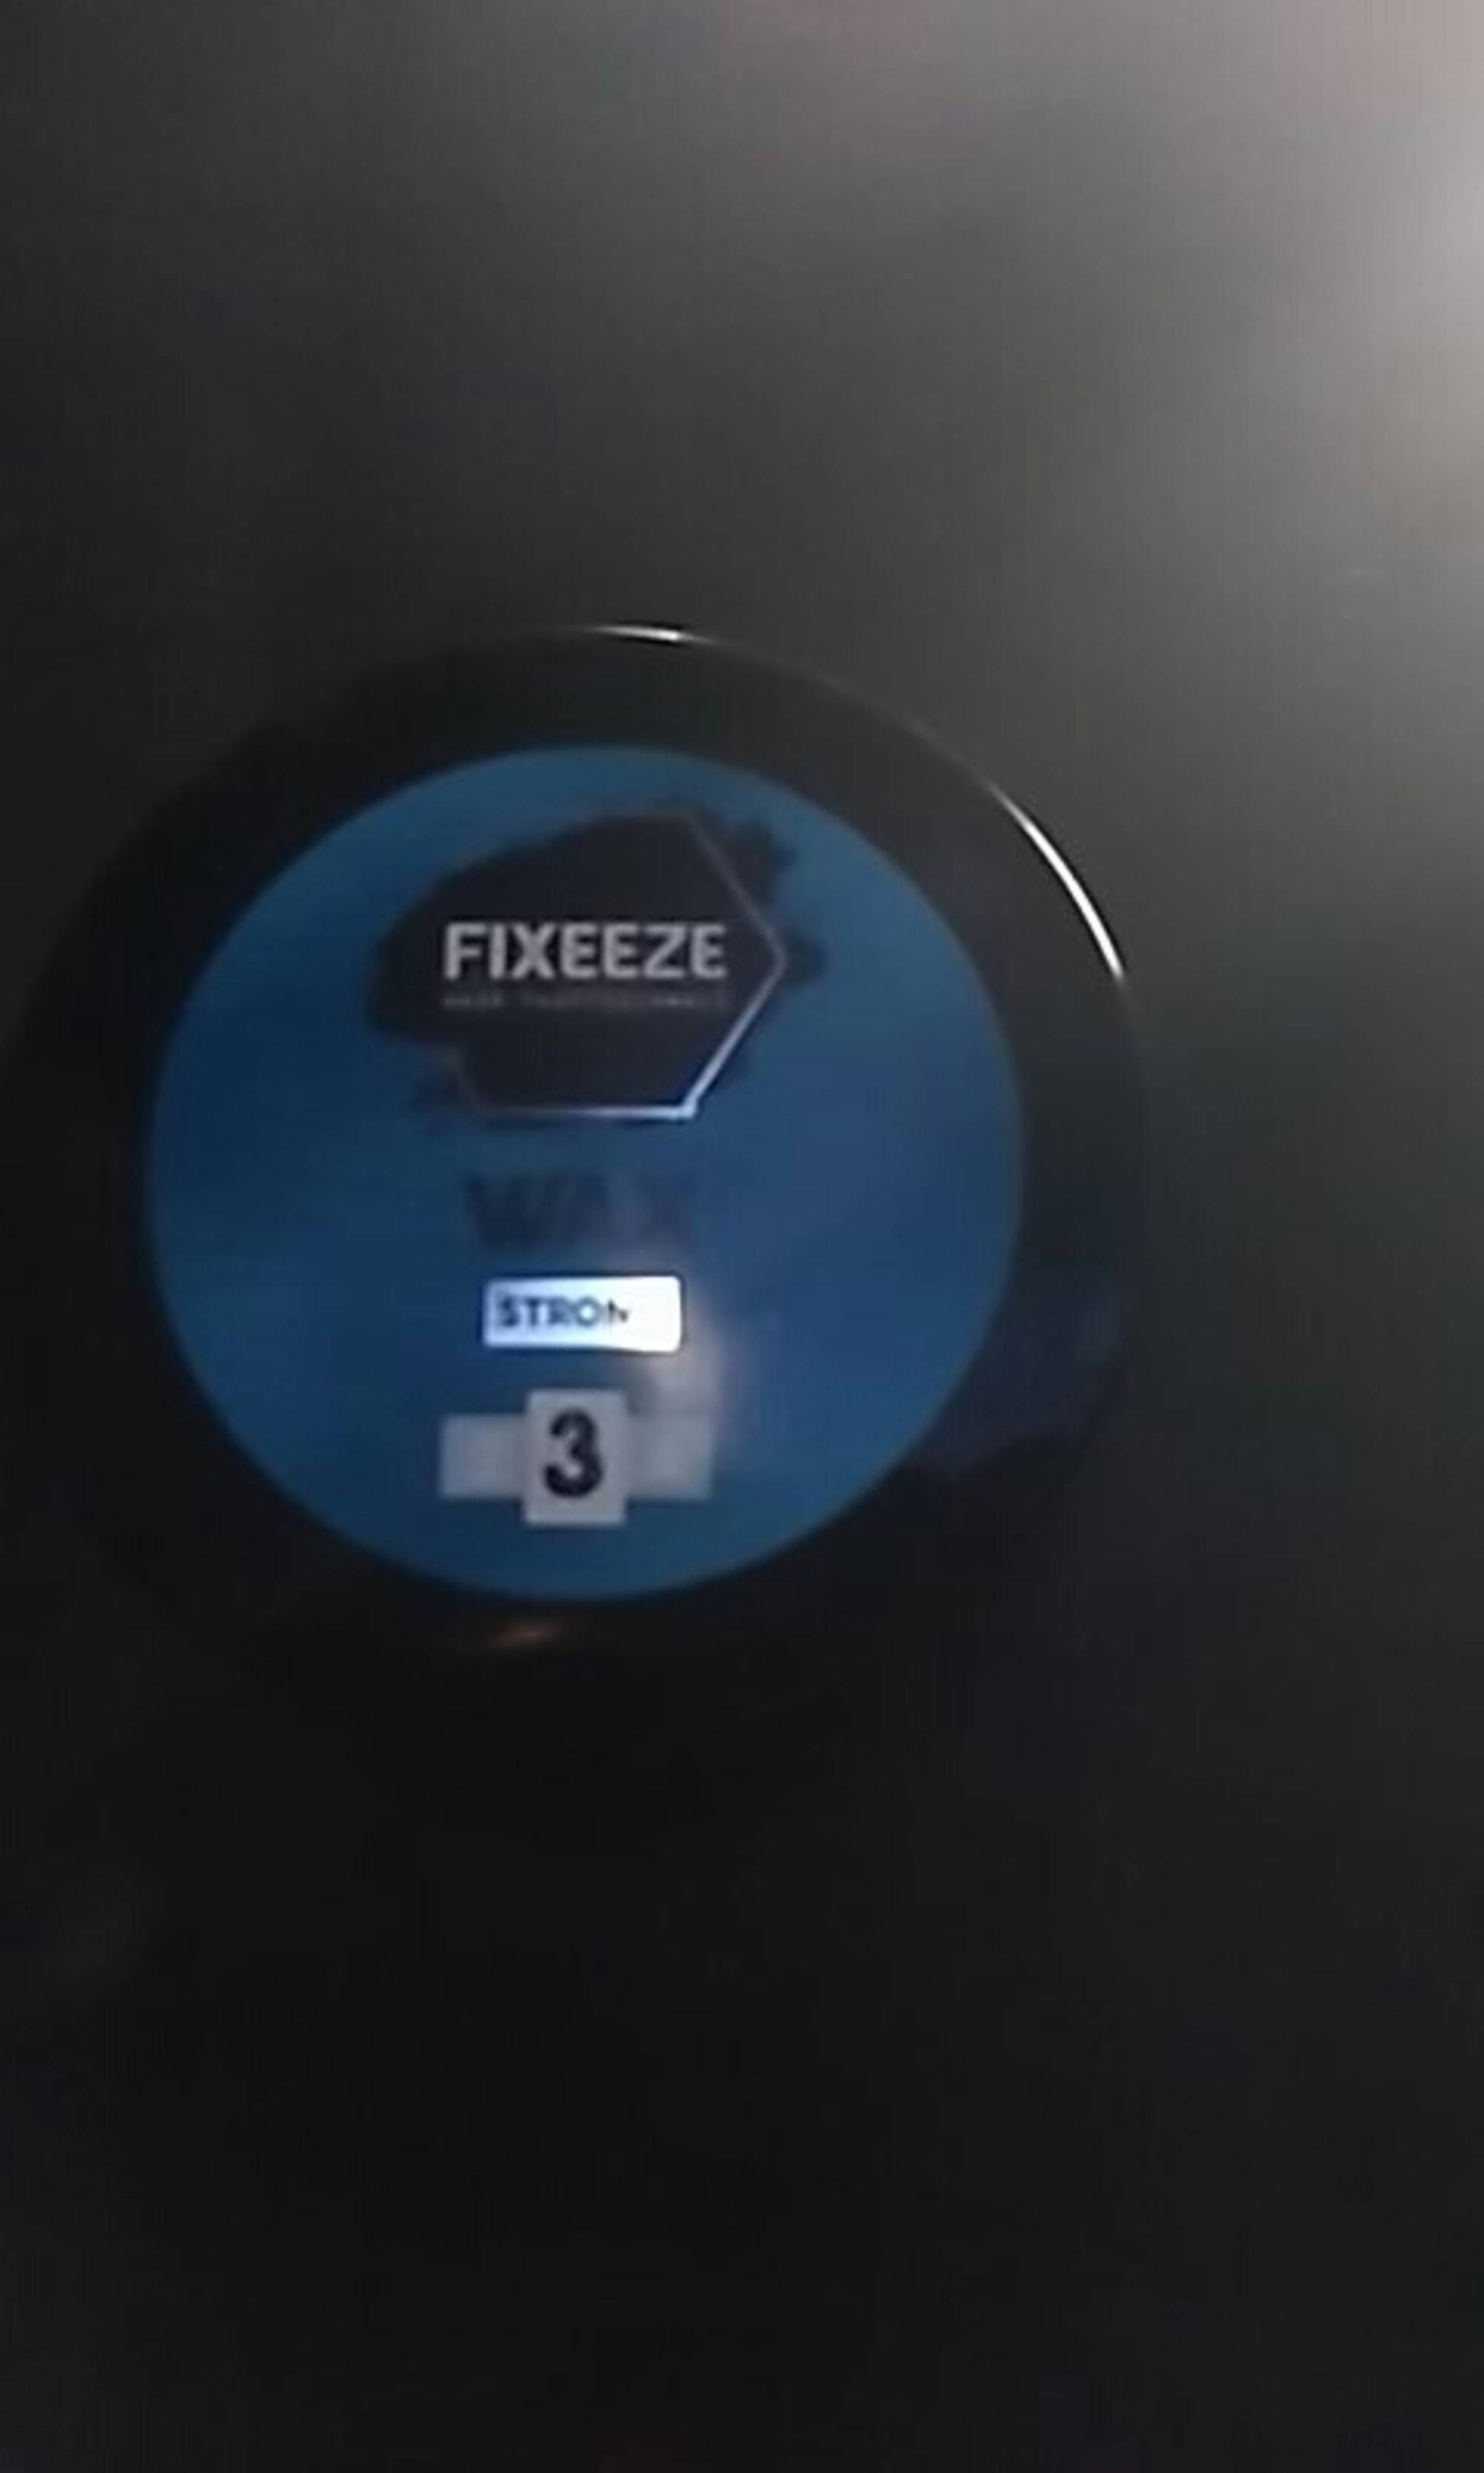 FIXEEZE - Wax strong 3